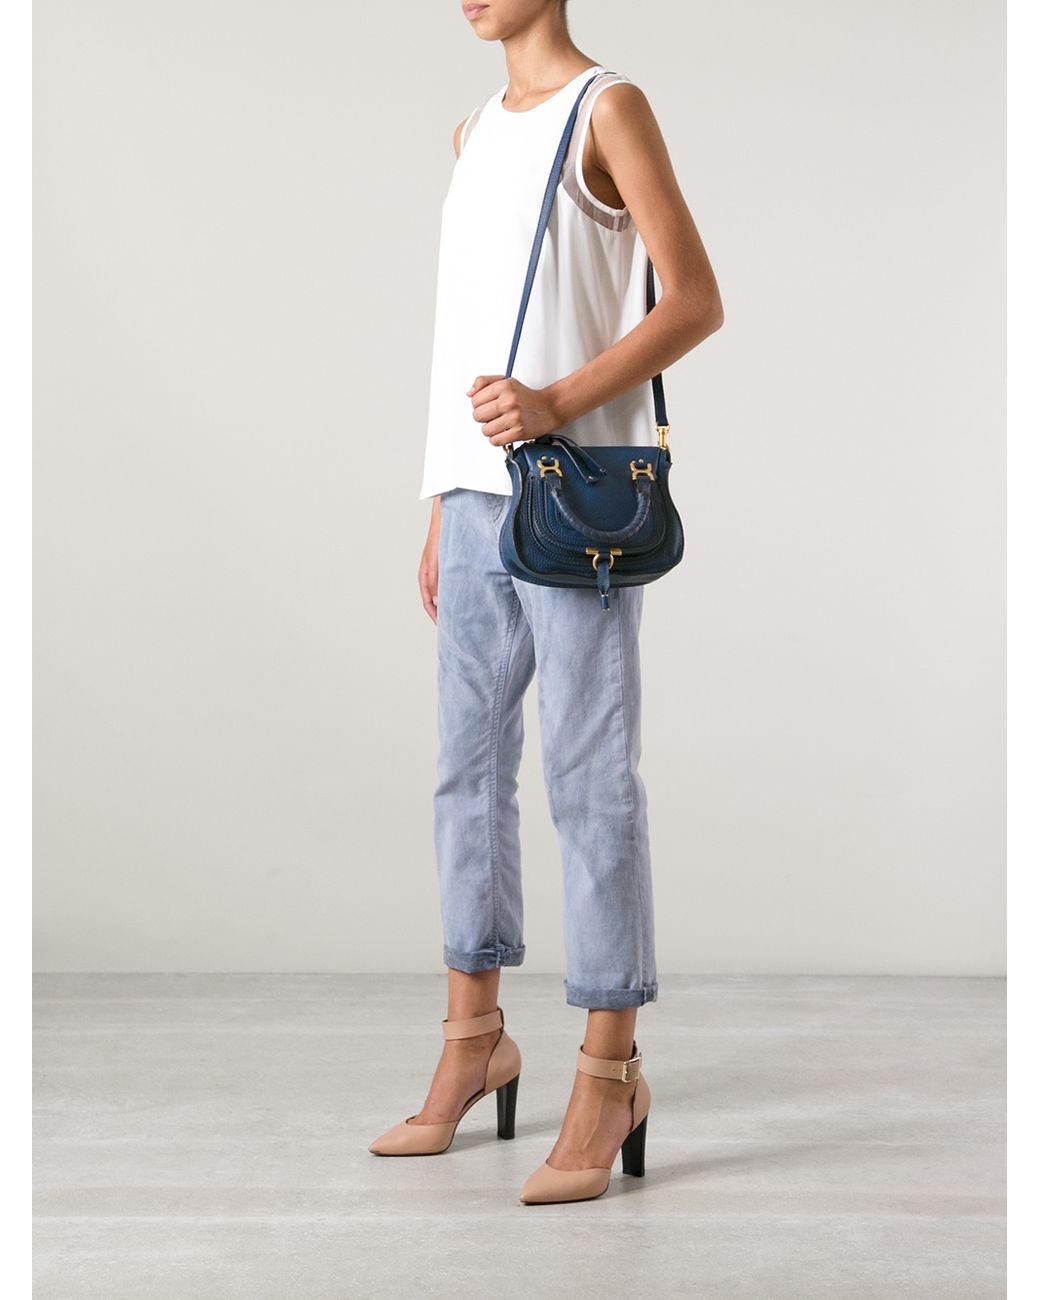 Chloé Marcie Mini Shoulder Bag in Blue